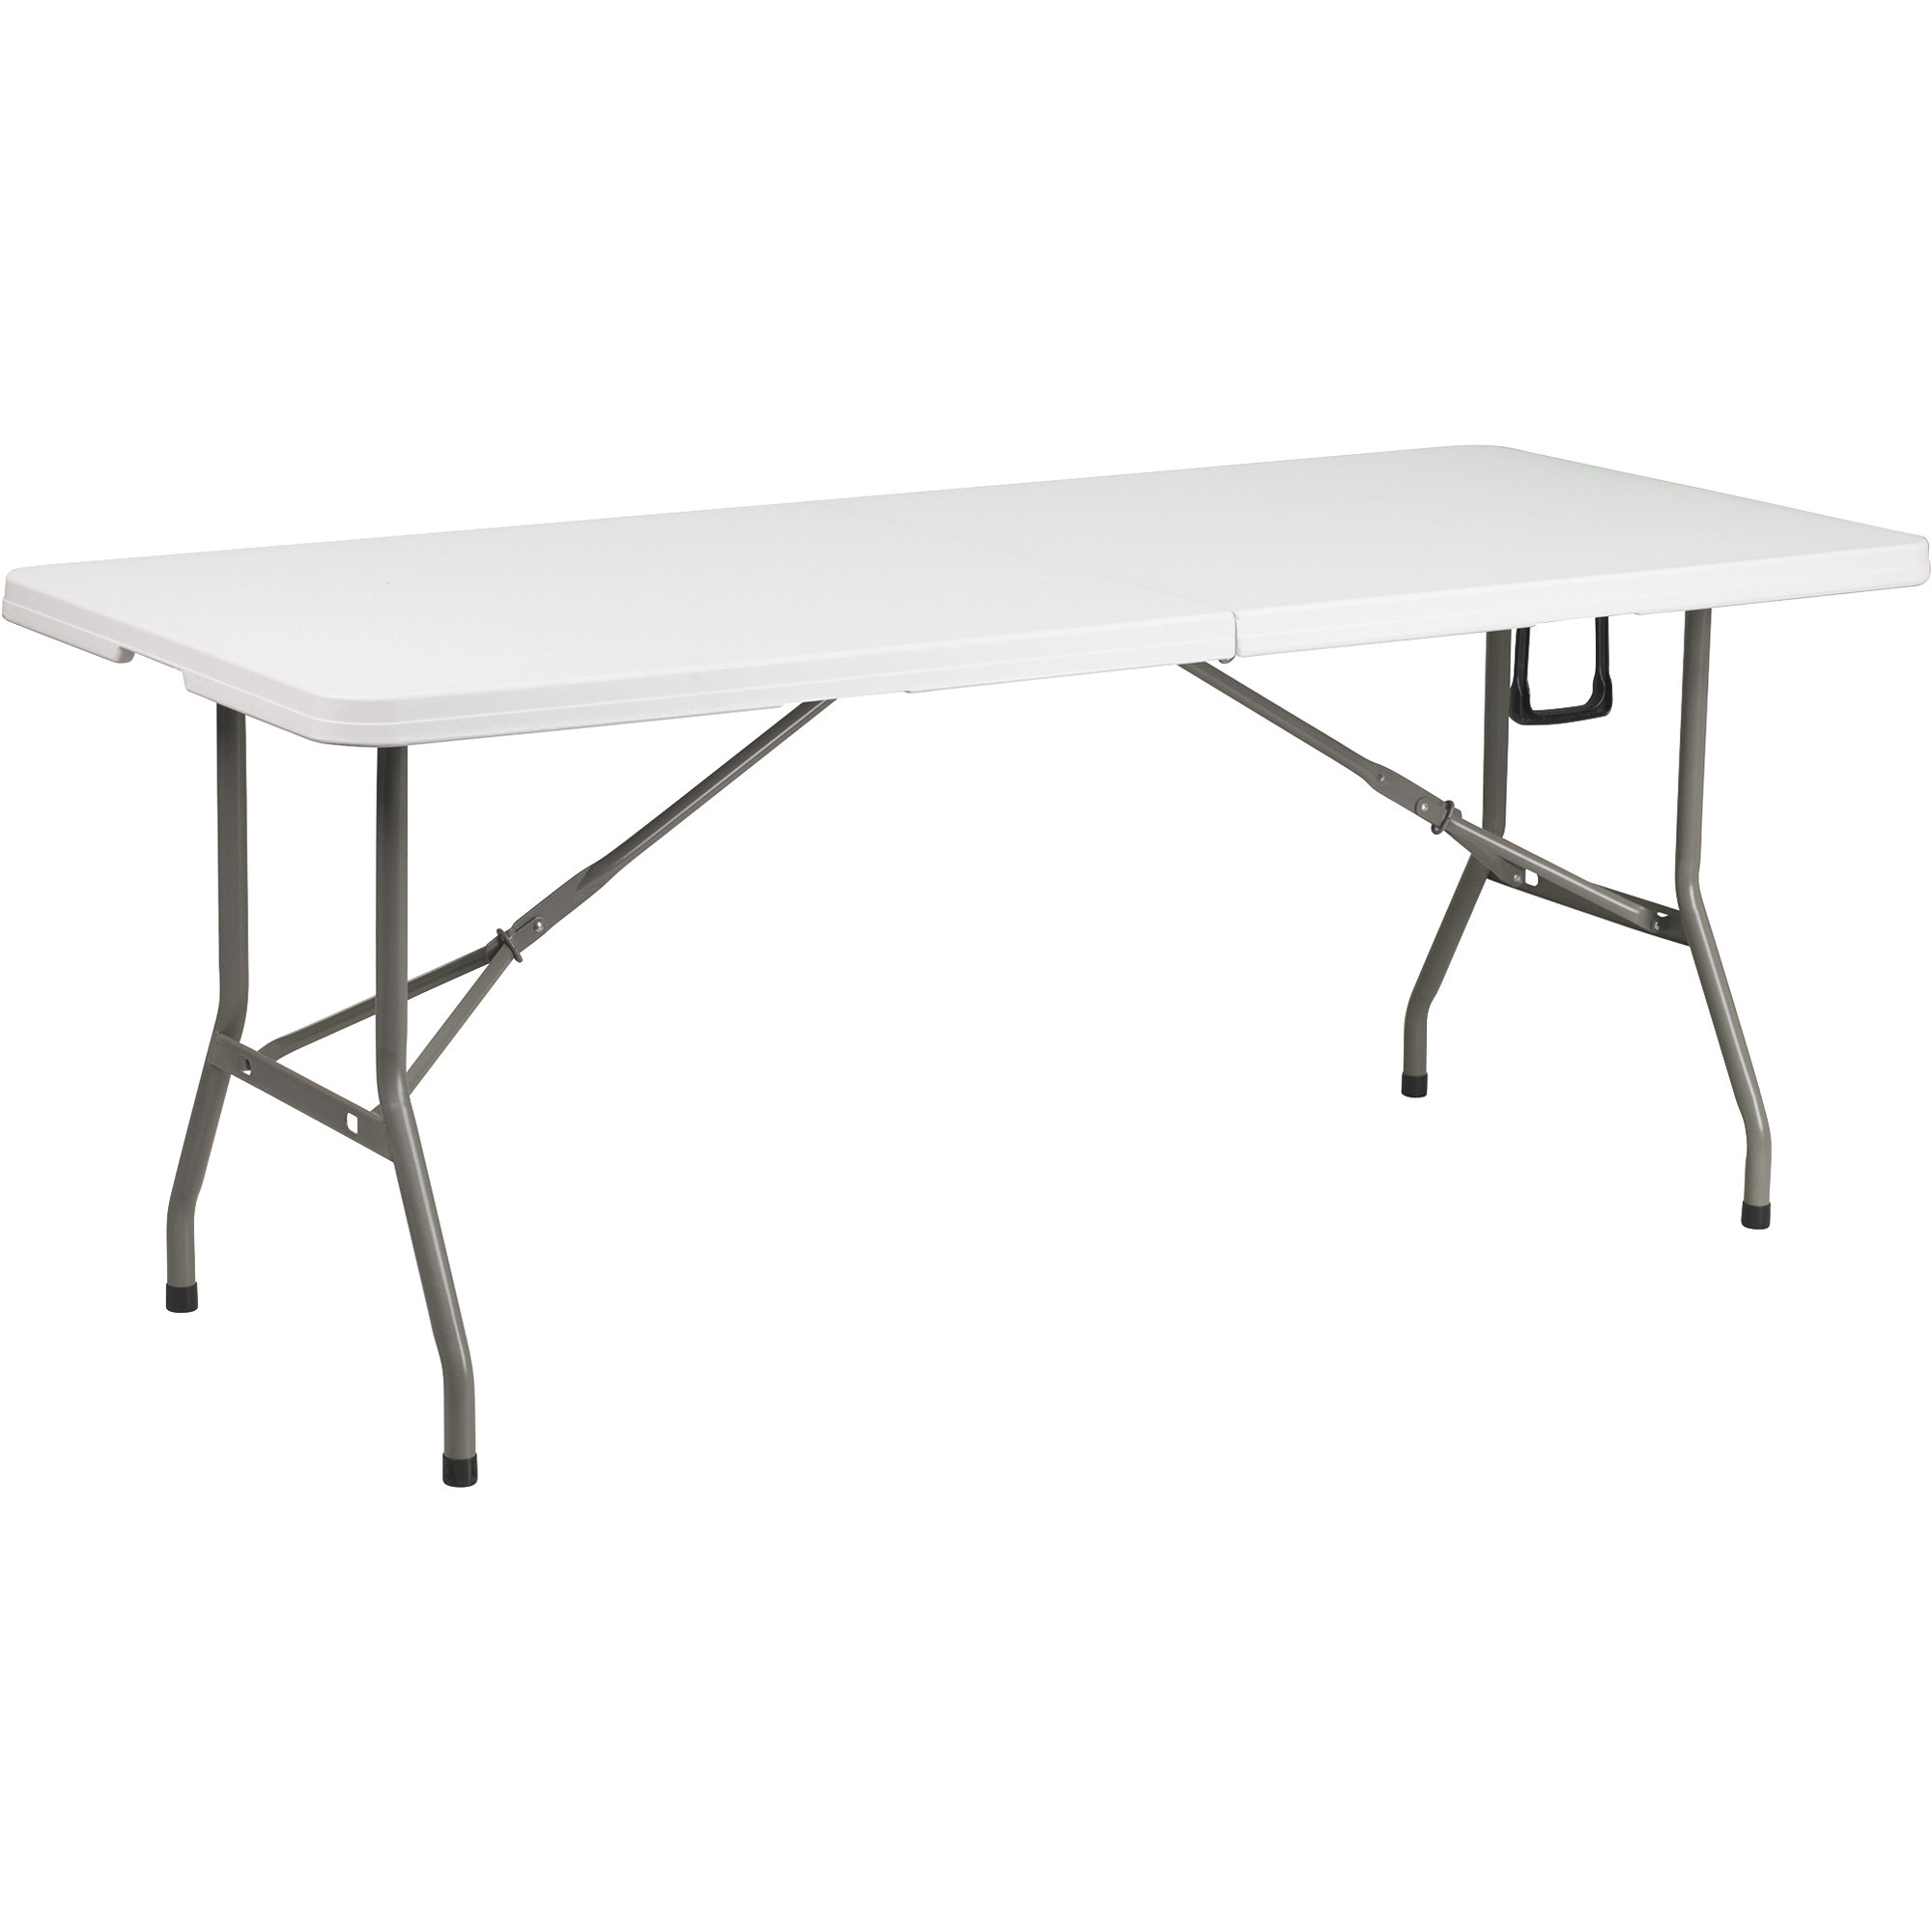 Flash Furniture Commercial-Grade Plastic Bi-Fold Table â Granite White, 72Inch L x 30Inch W x 29Inch H, Model DADYCZ183Z